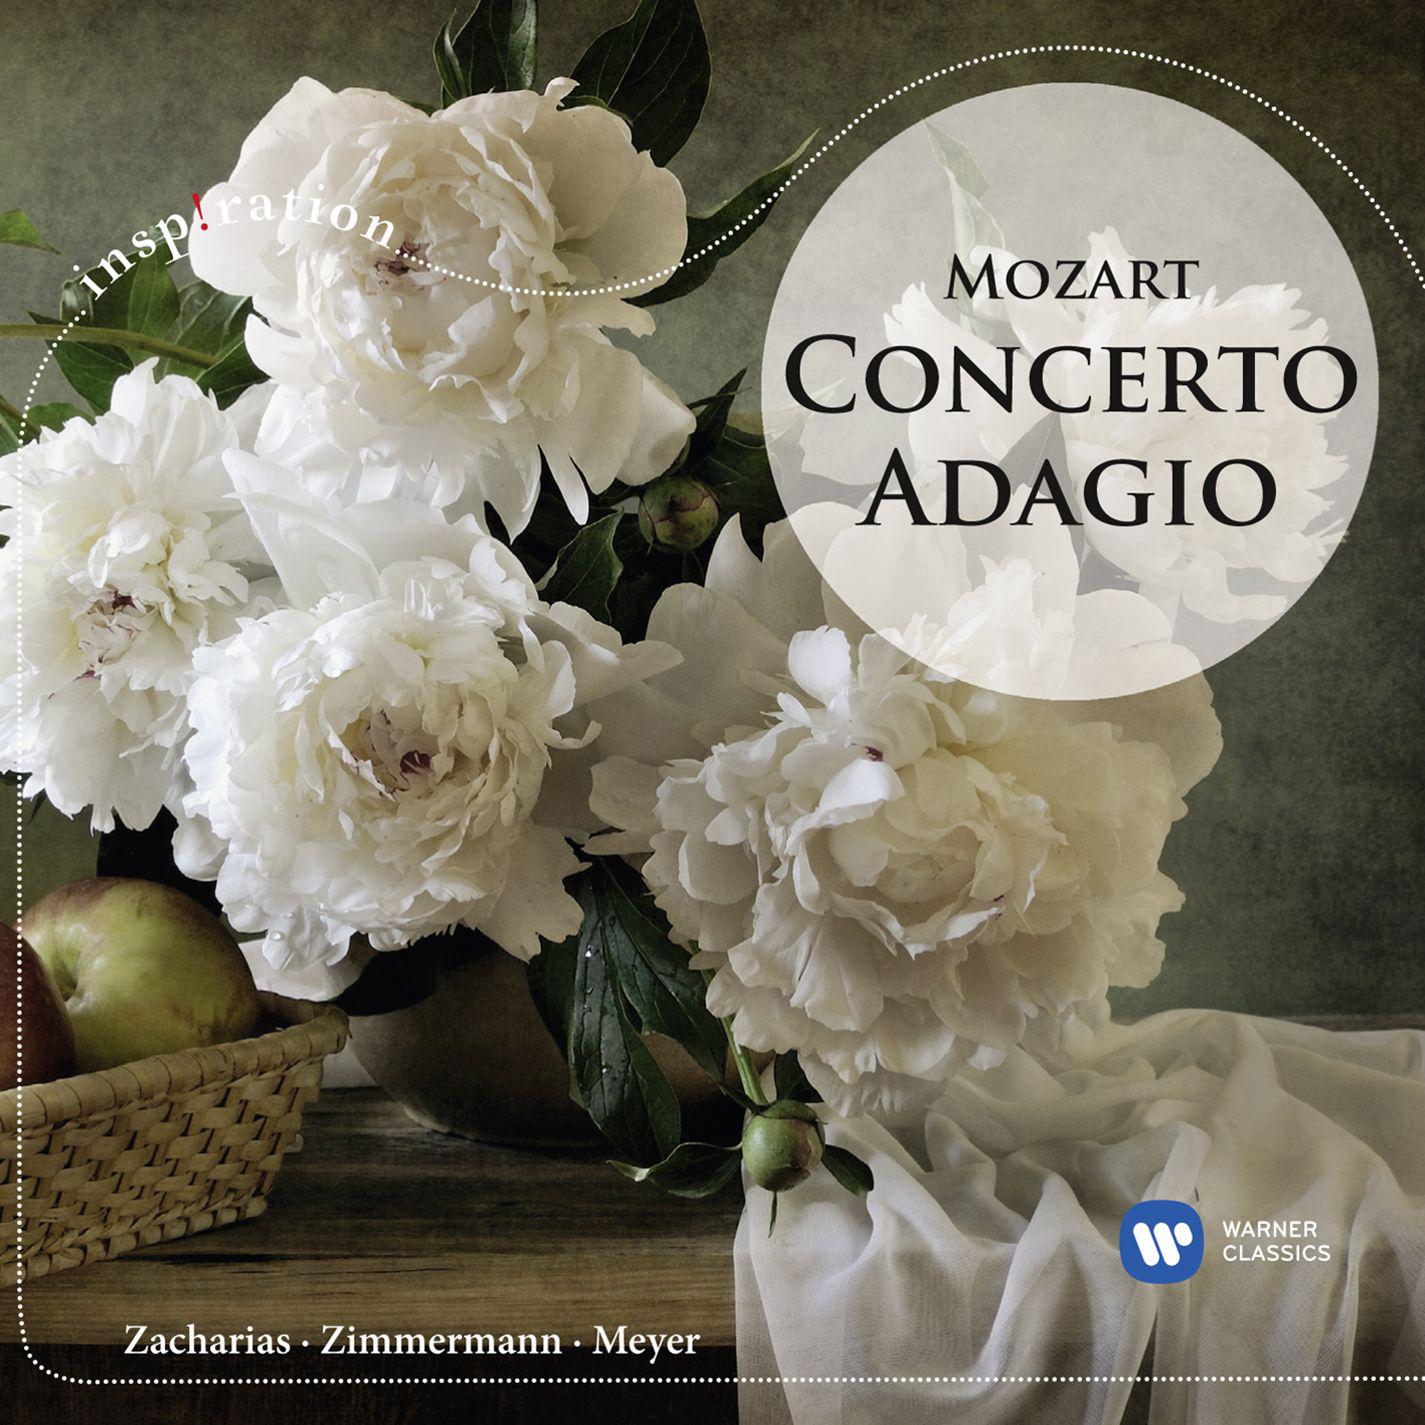 Oboe Concerto in C Major, K. 314:II. Adagio non troppo